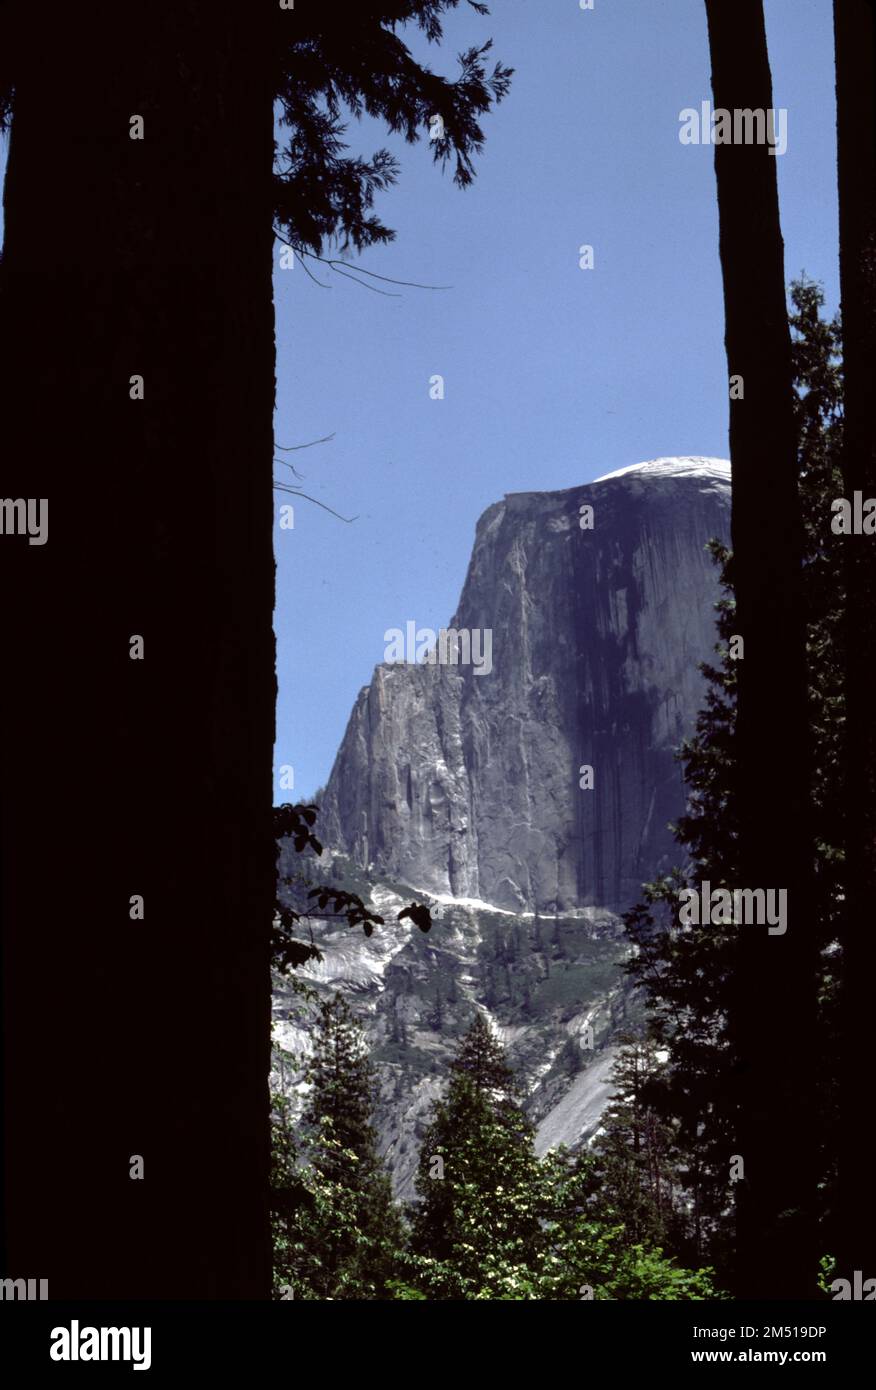 Yosemite National Park, CA., U.S.A. 9/1986. Yosemite National Park ...